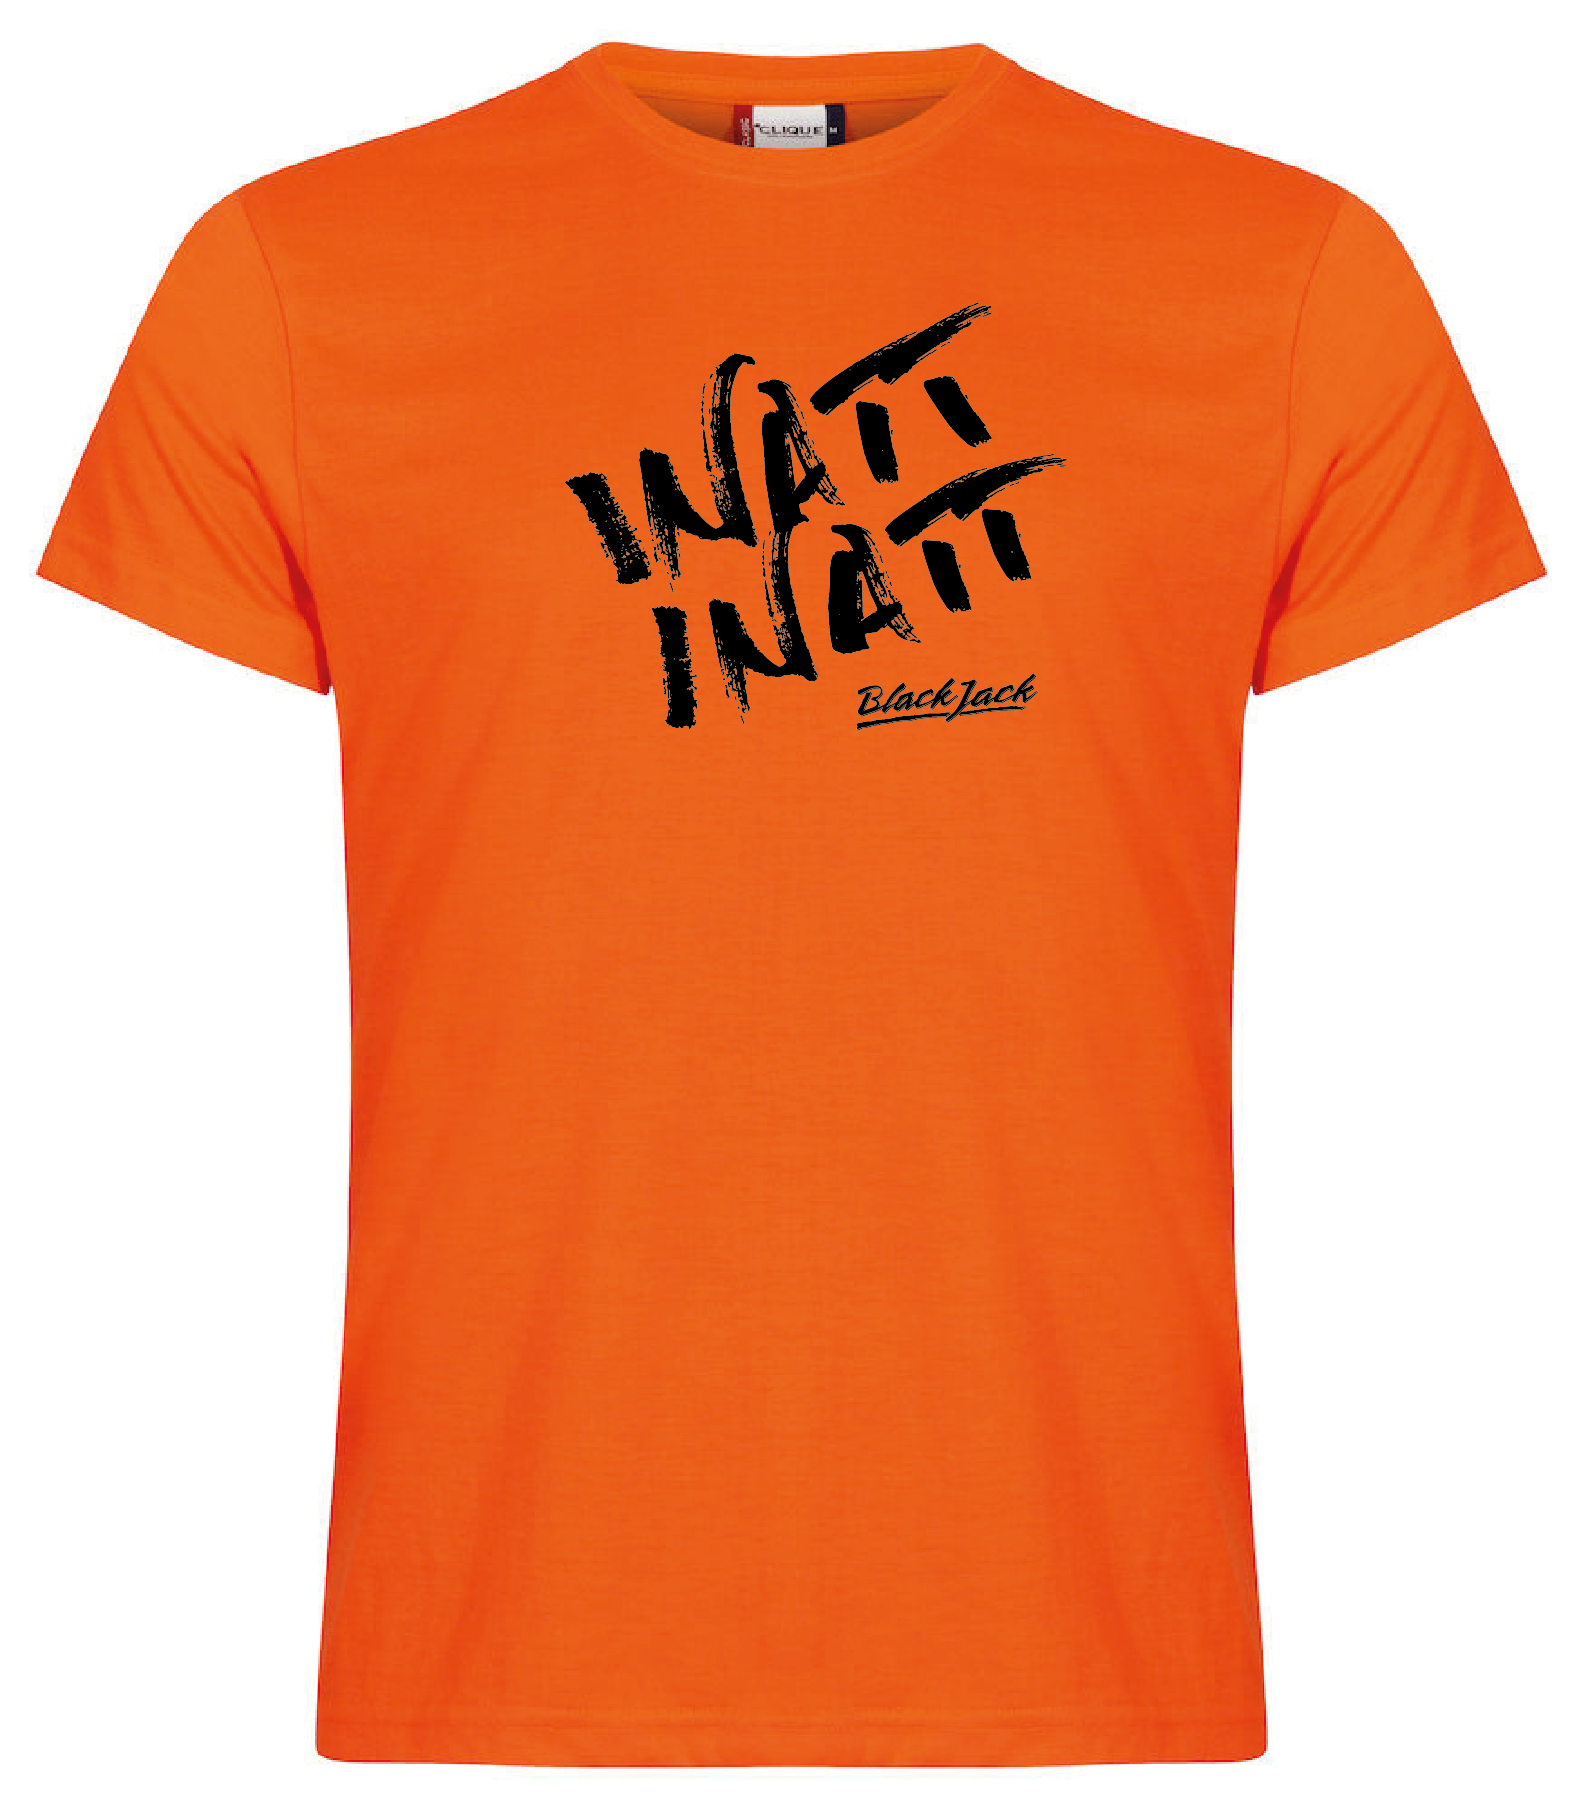 Orange T-shirt "Black Jack Inatt, Inatt"